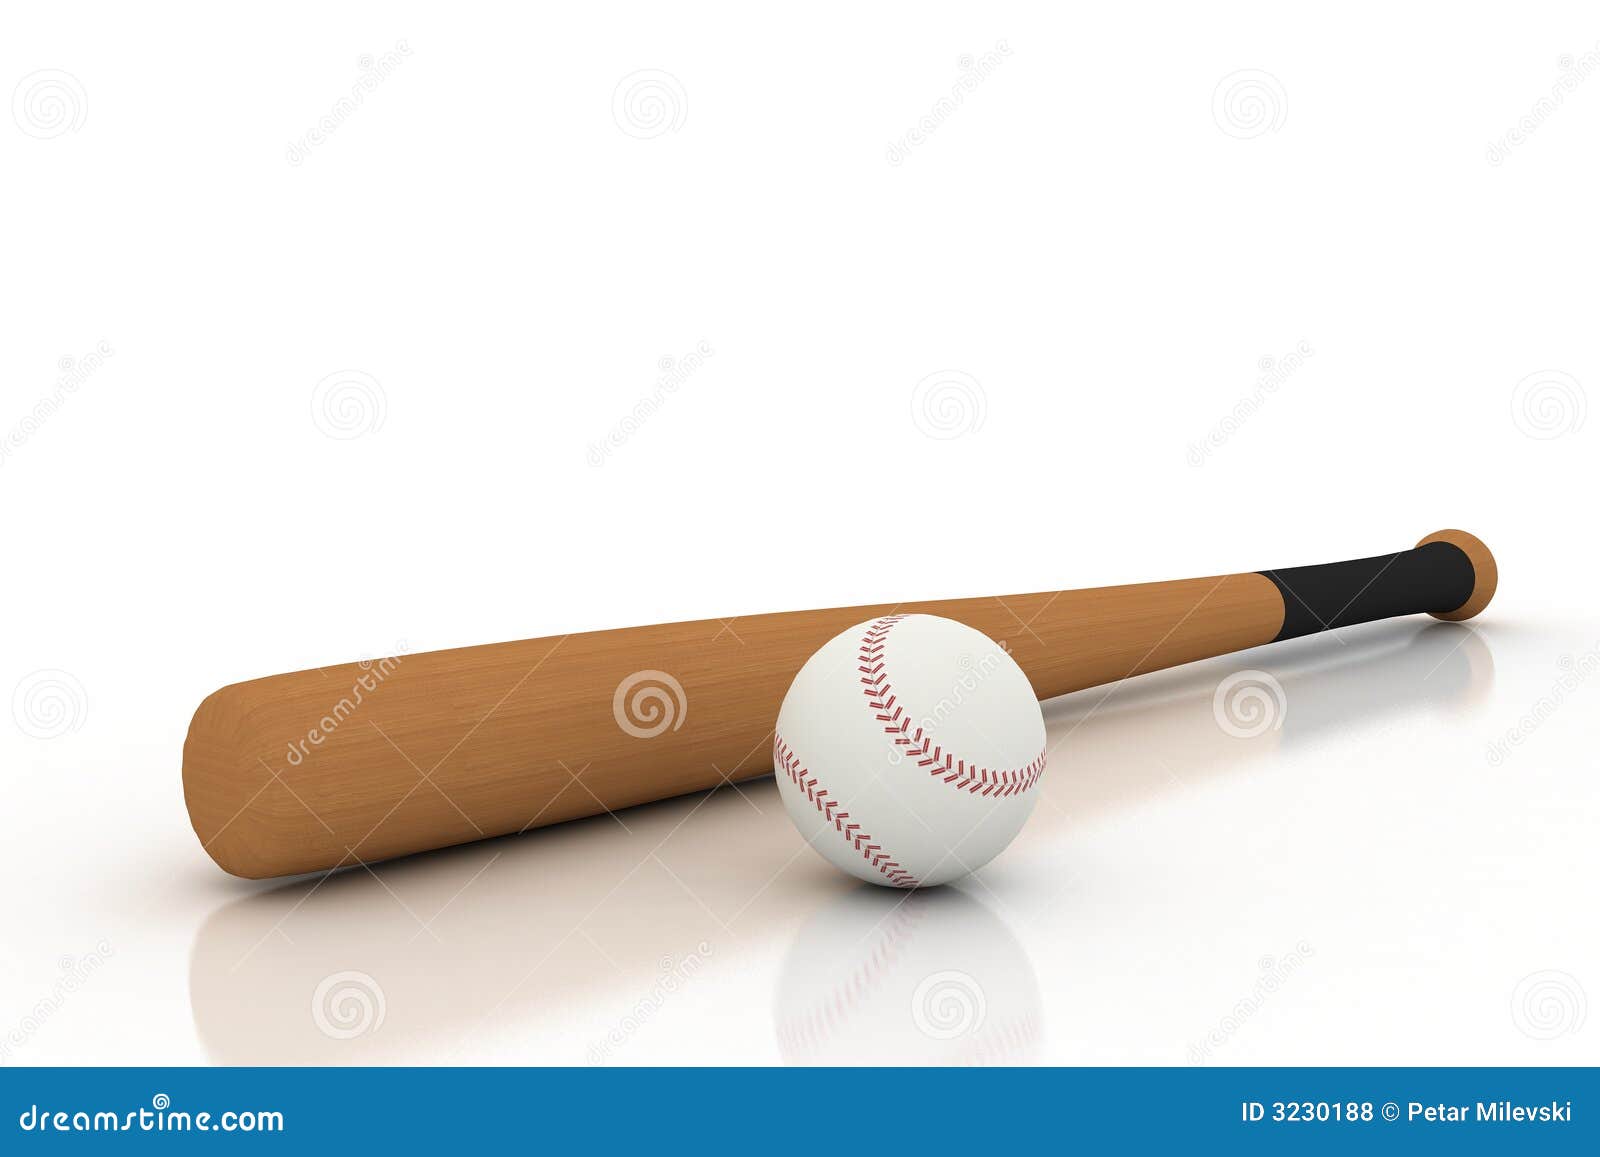 Baseball Bat And Ball On White Royalty Free Stock Photos ...